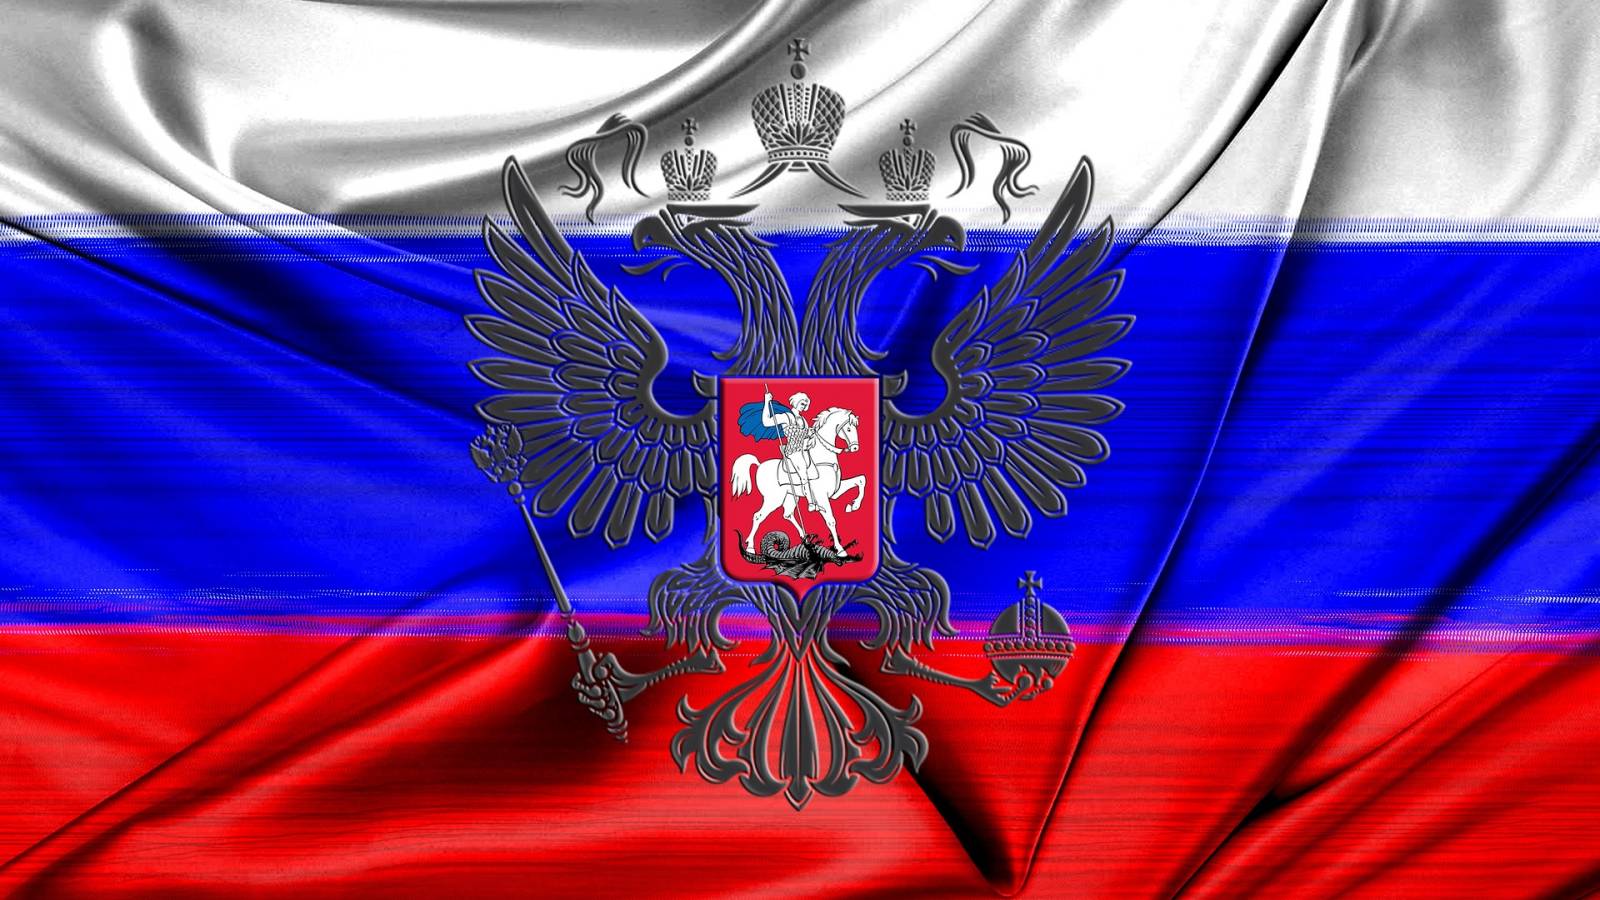 Noul Pachet Sanctiuni Impotriva Rusiei Agreat Comisia Europeana